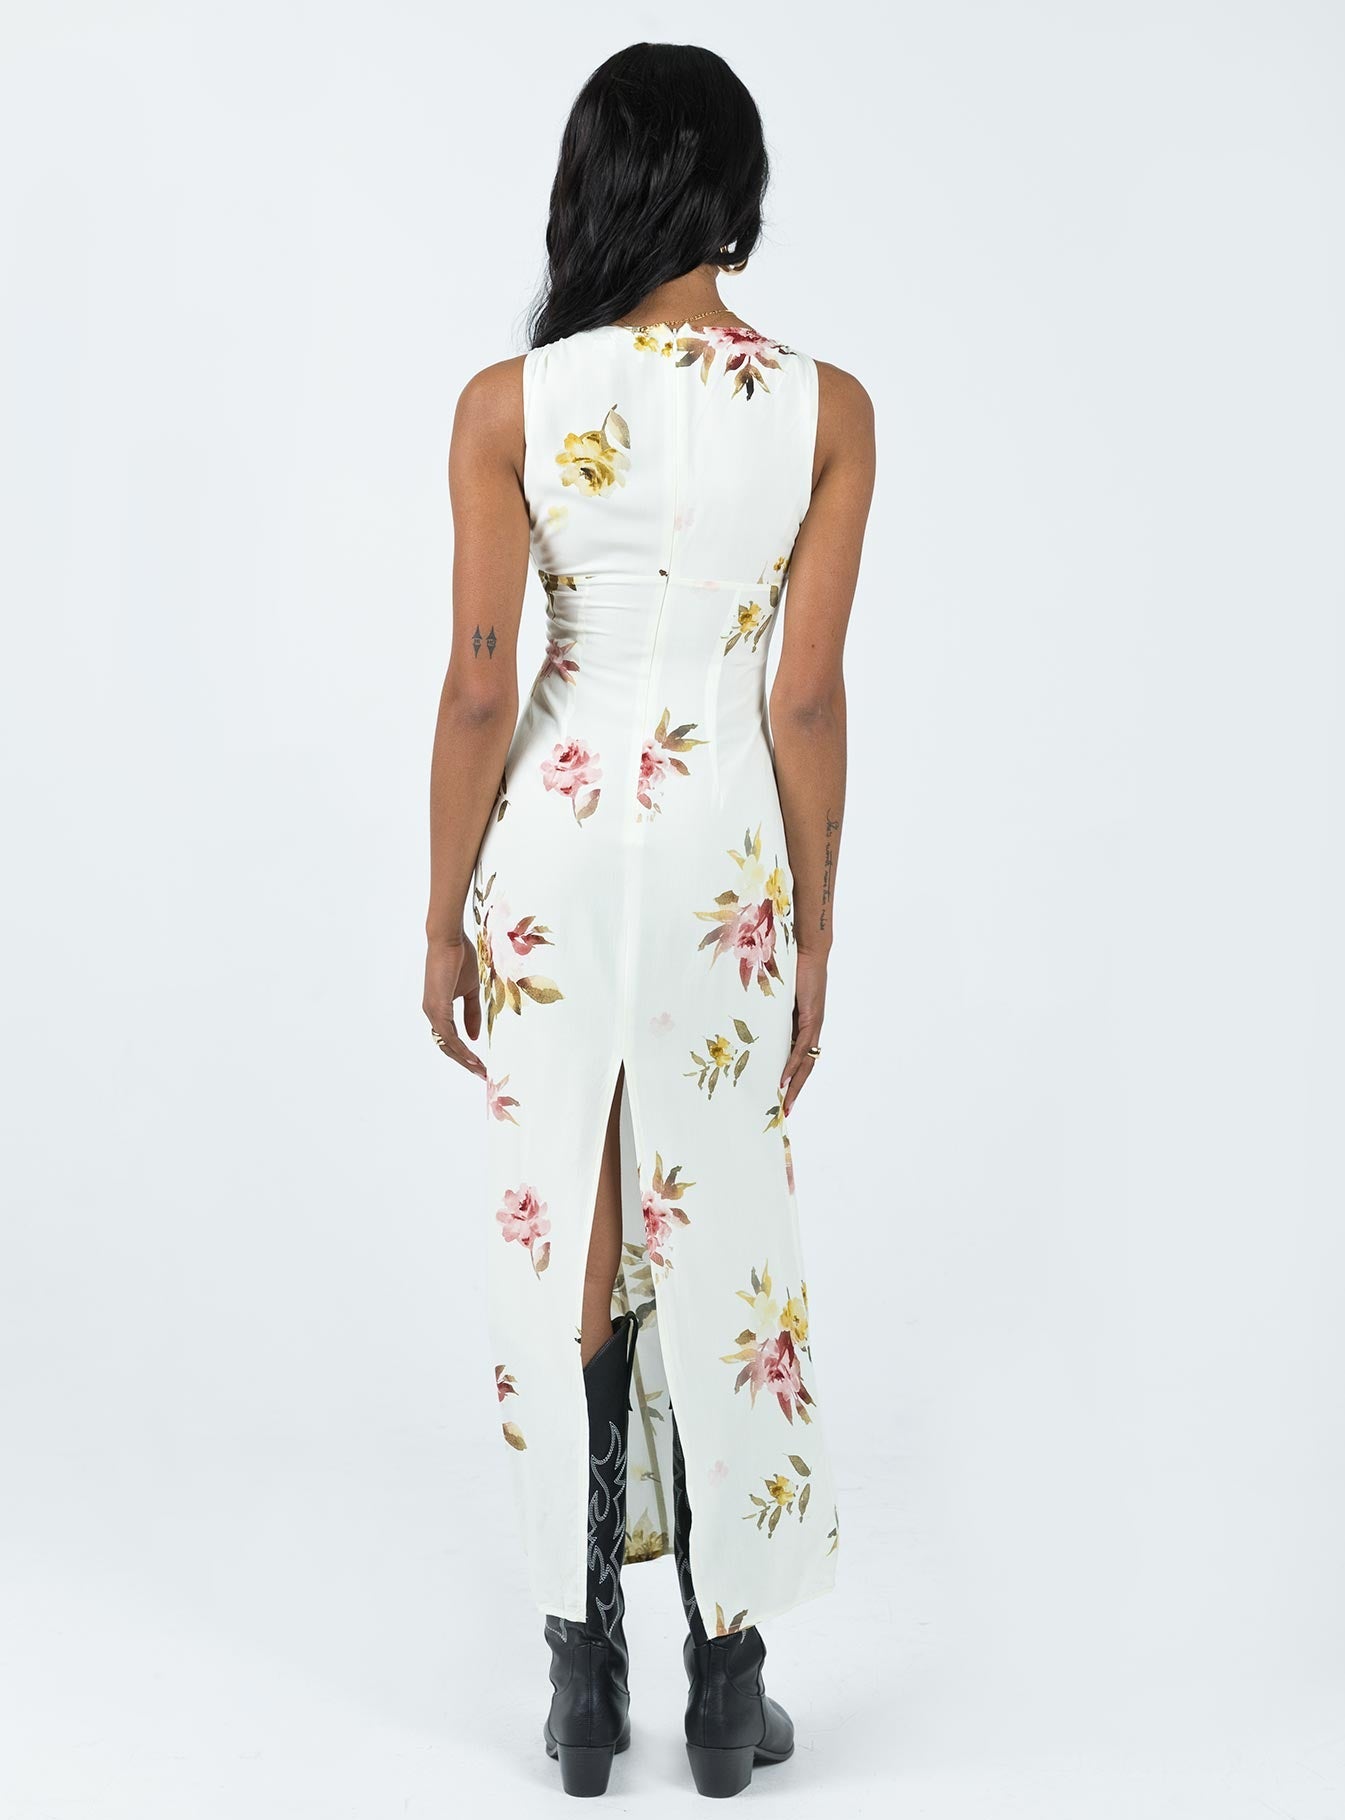 Shop Formal Dress - Malibu Maxi Dress Cream Multi featured image